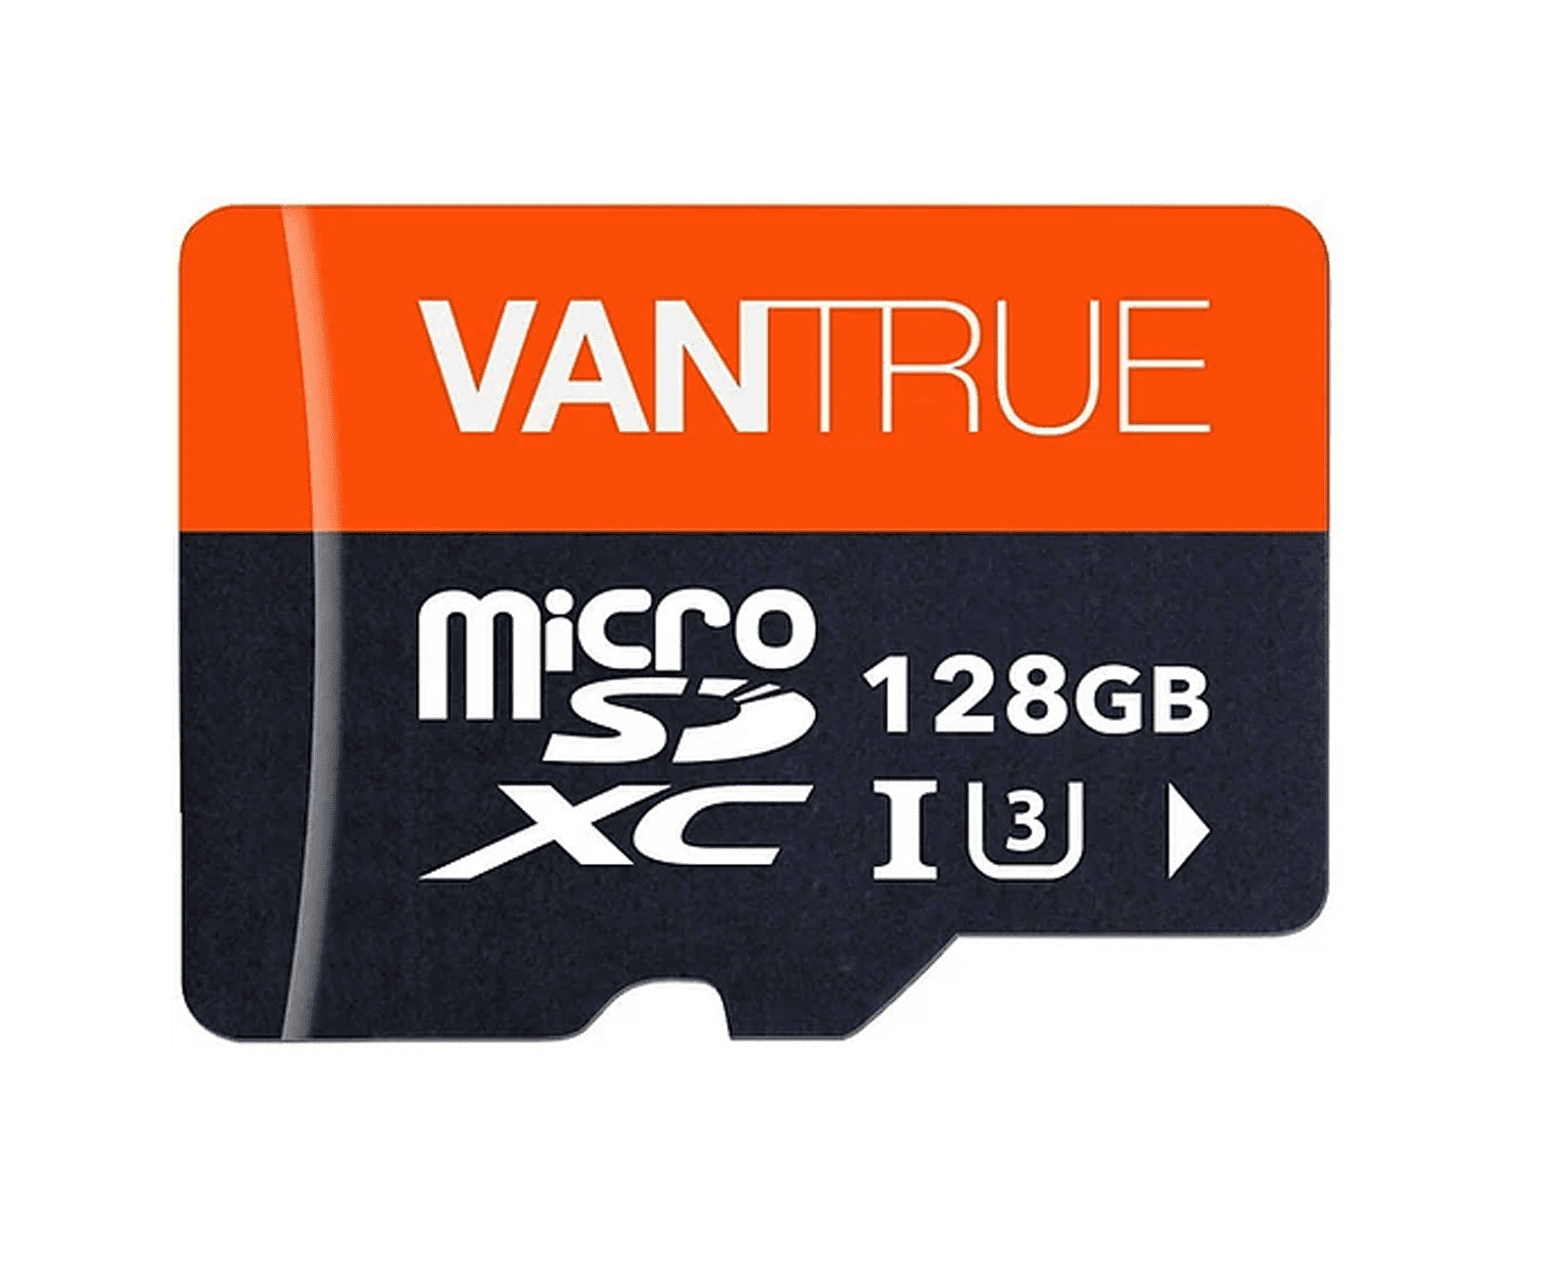 Vantrue 128GB SD card 